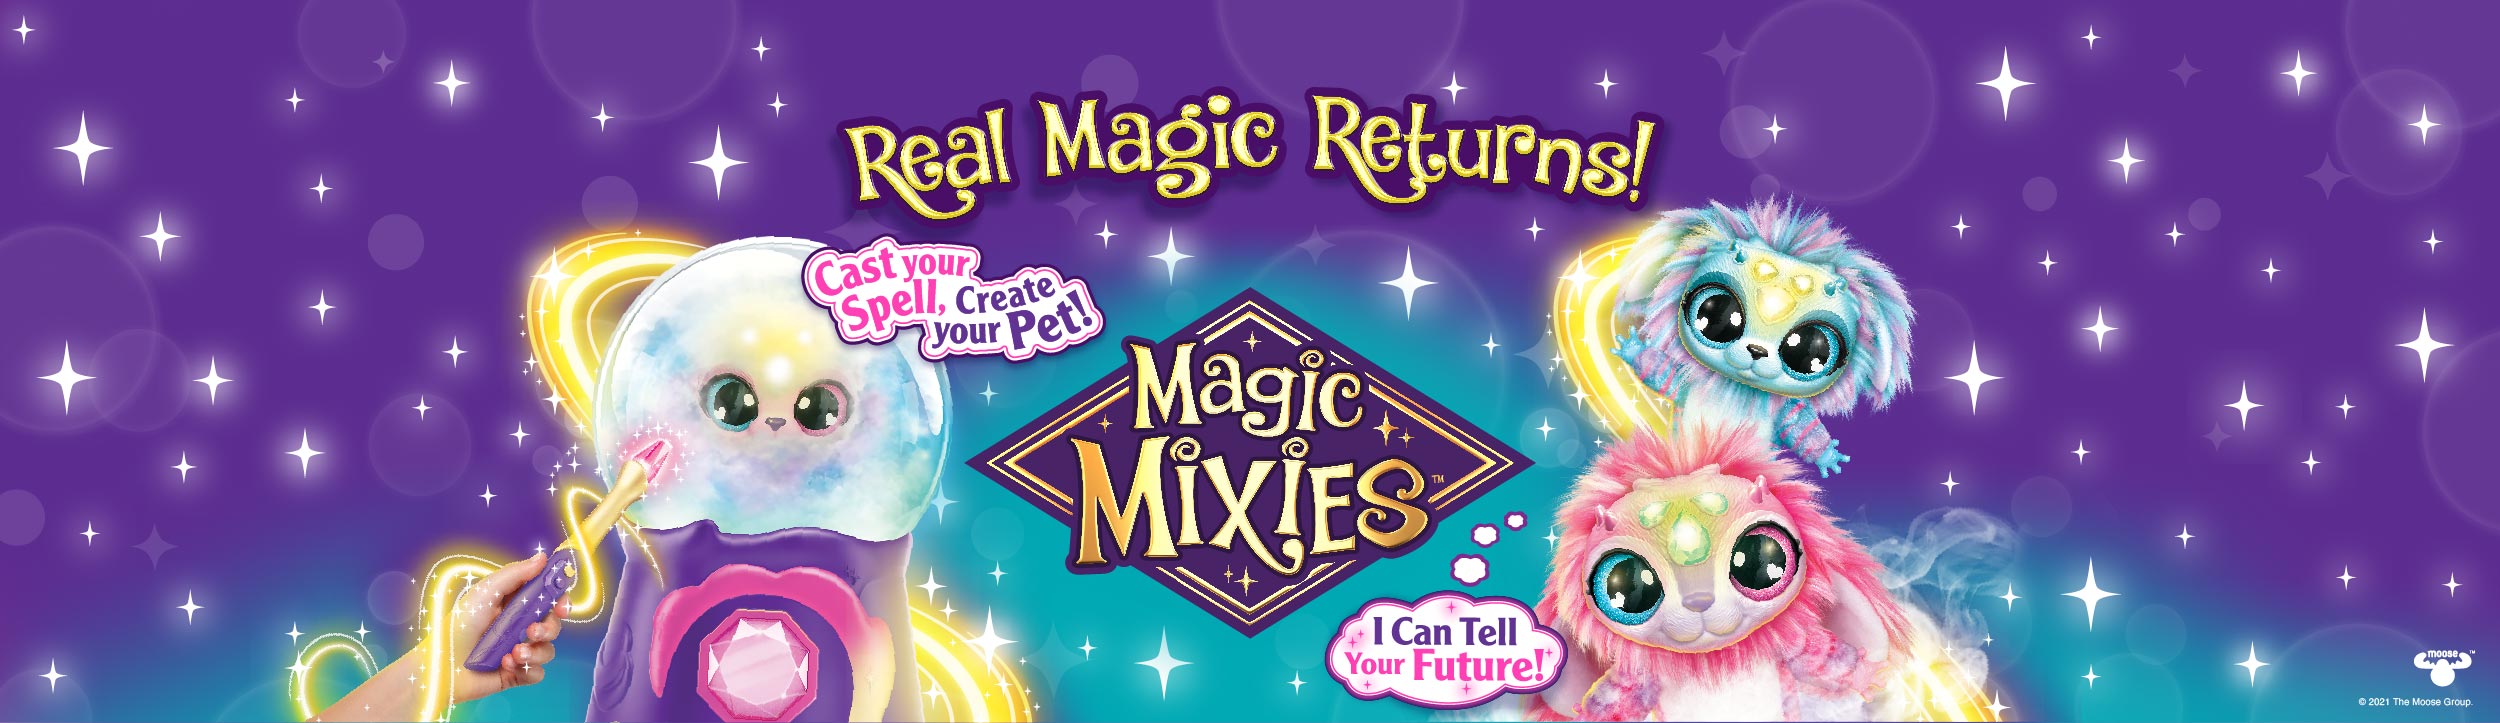 Magic Mixies Moonlight Magic Crystal Ball